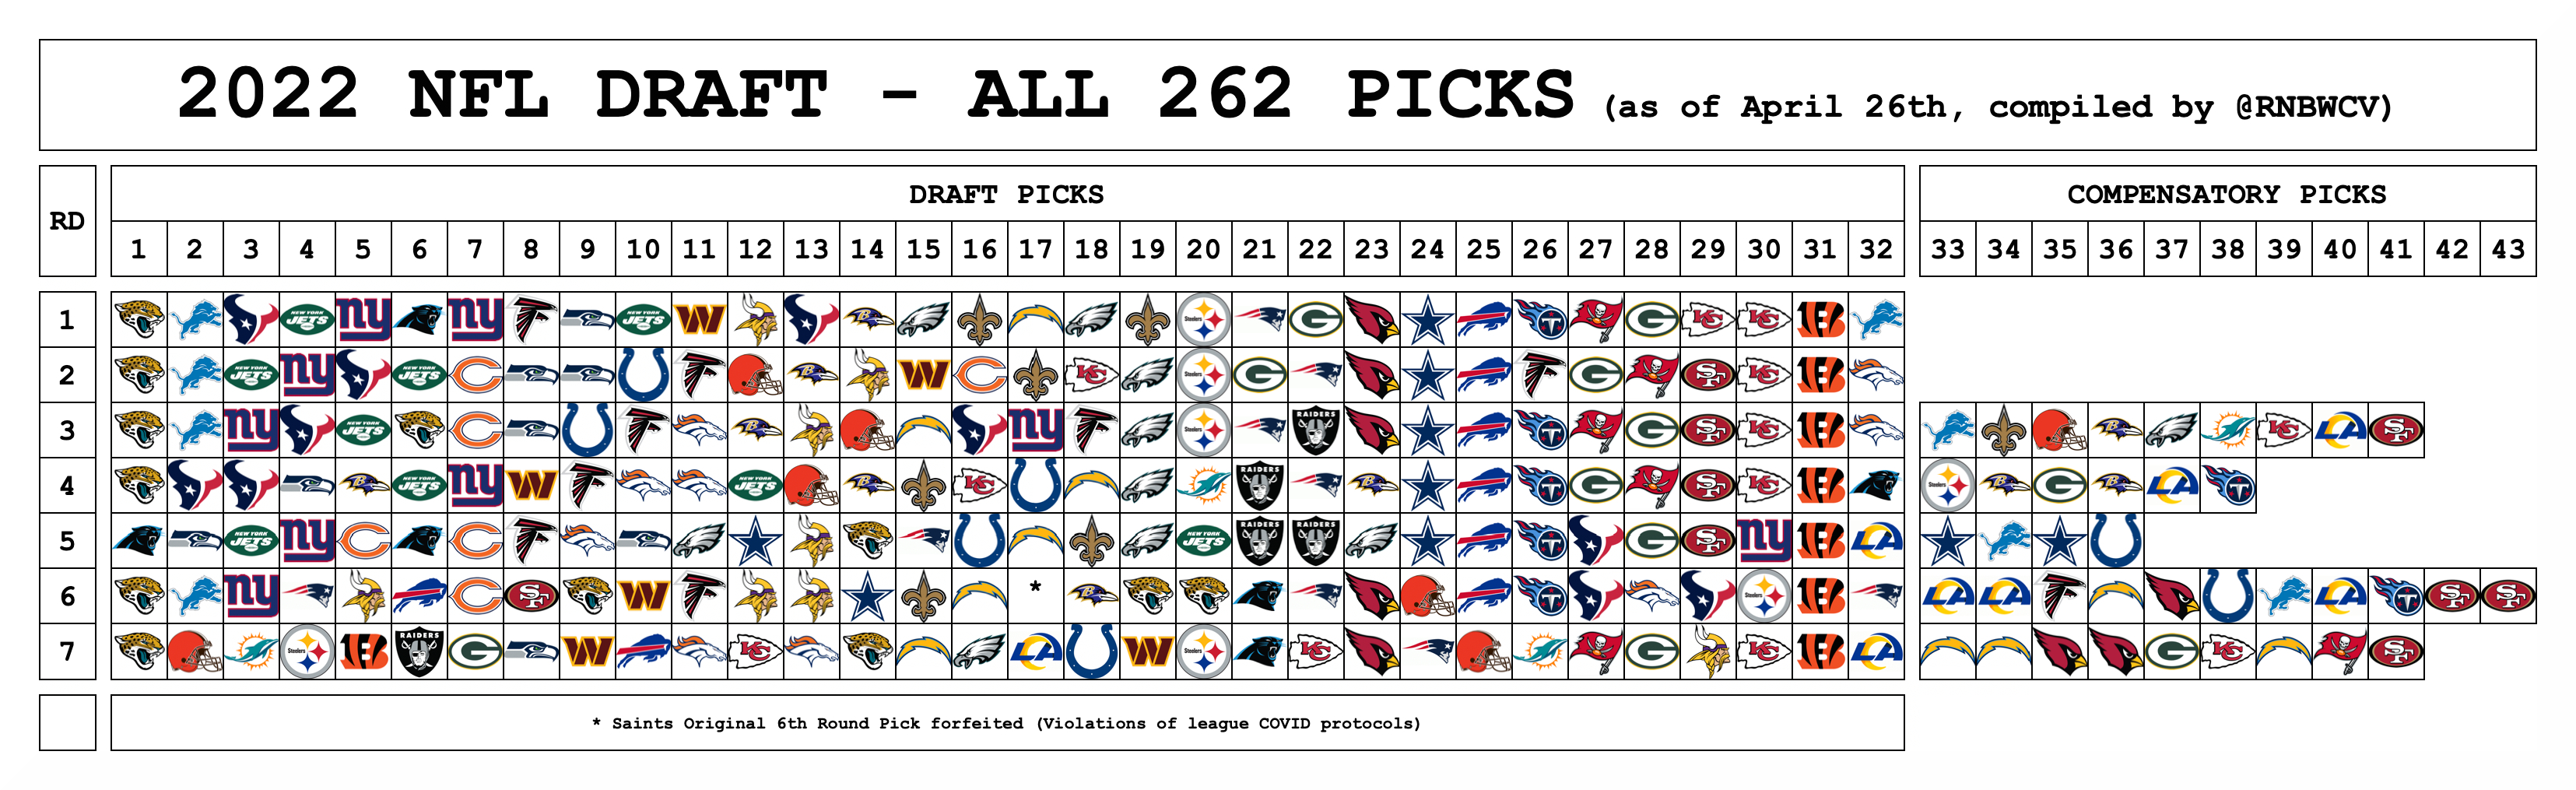 René Bugner on X: 'The 262 picks of the 2022 NFL draft. The